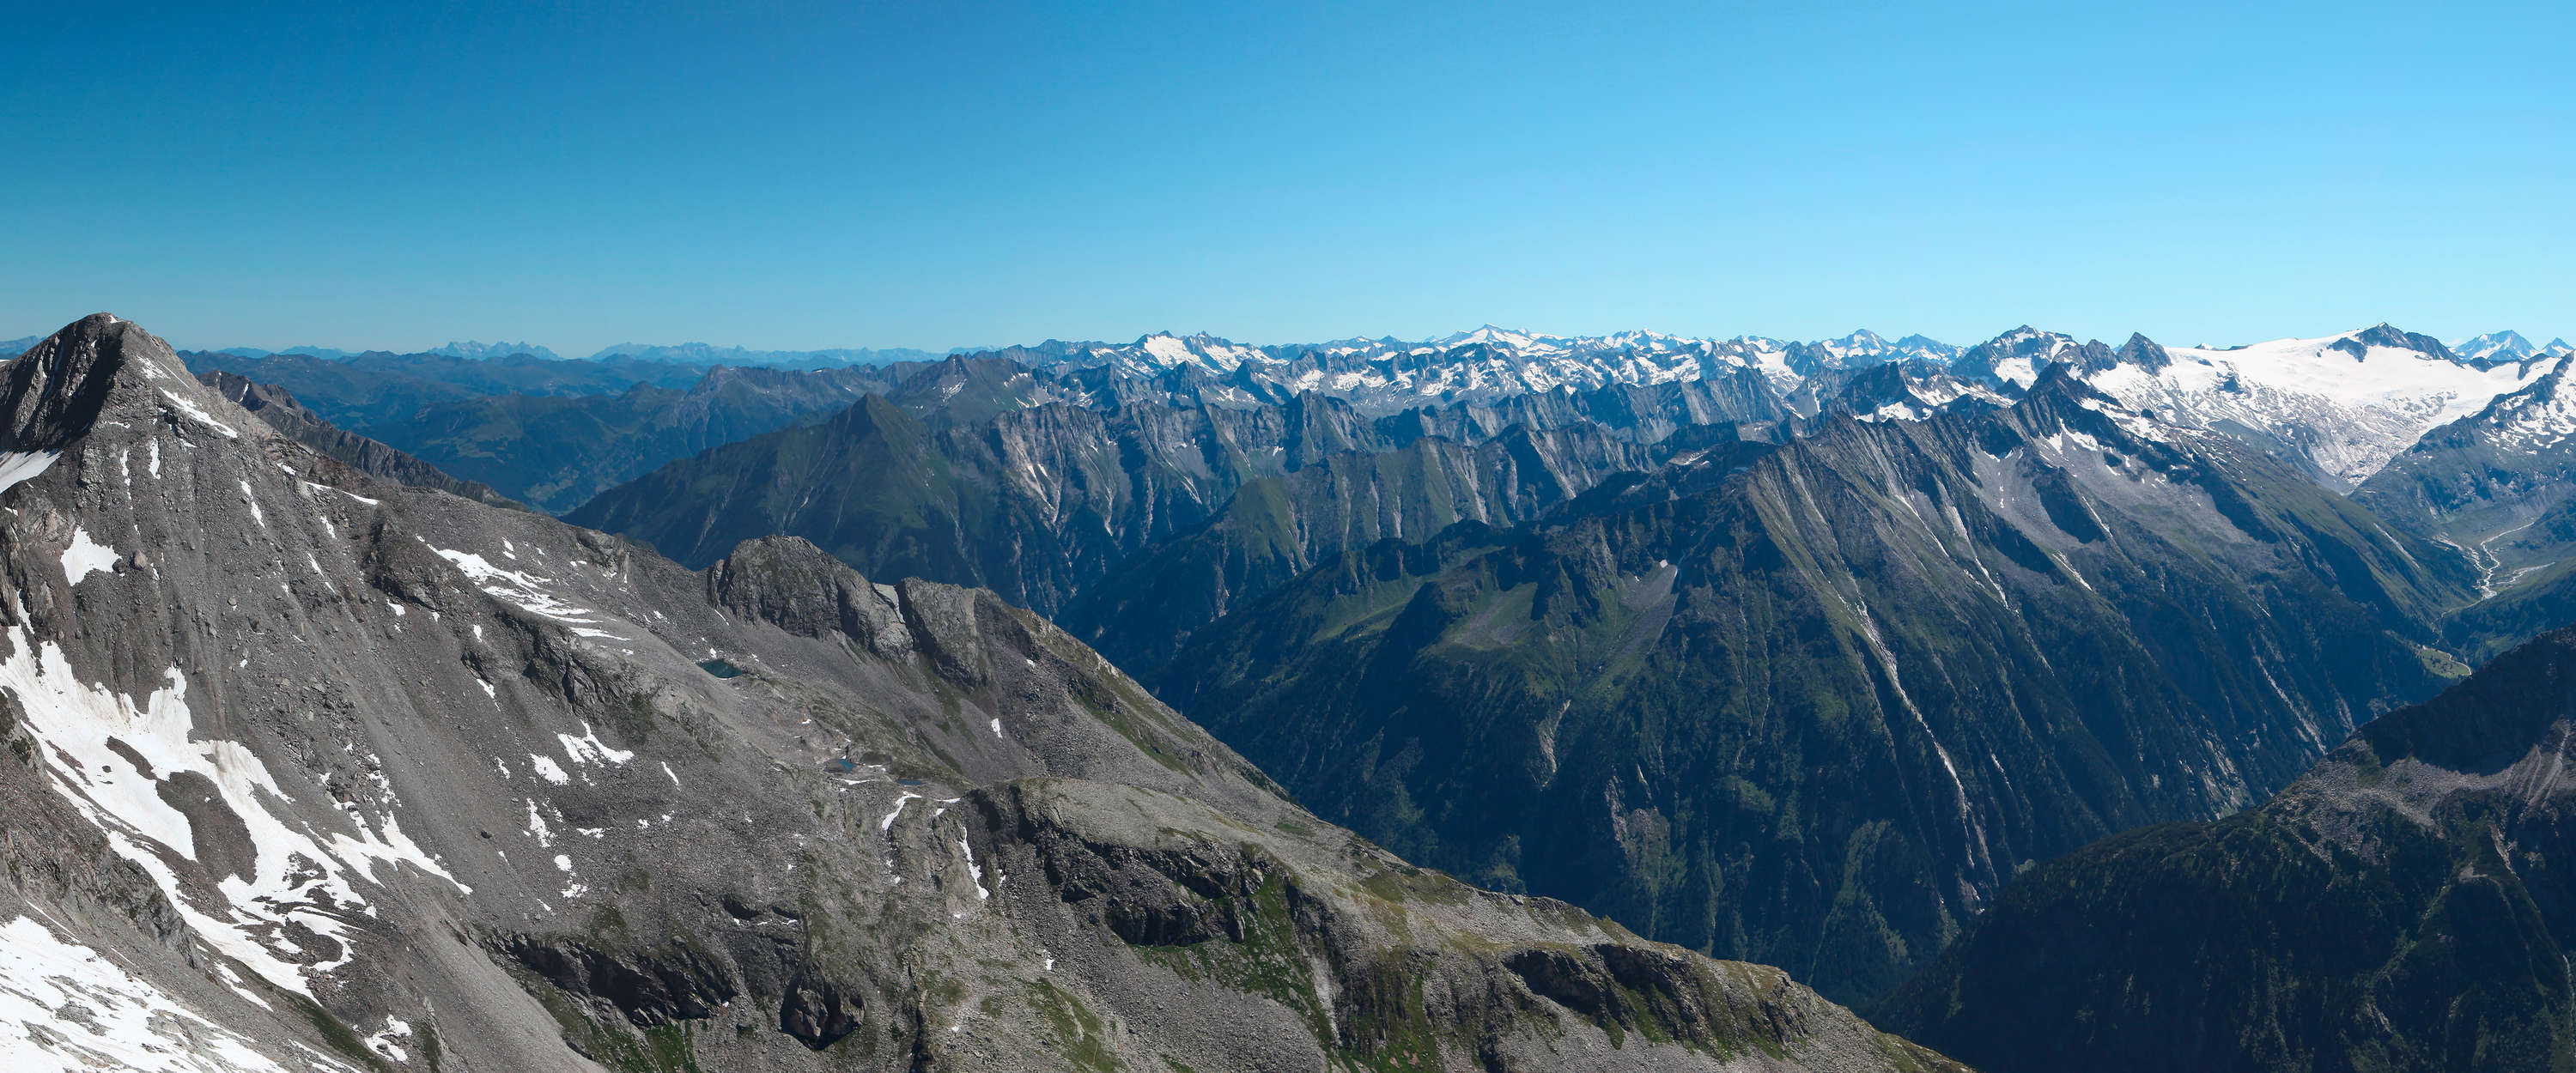             Panoramamuur met ruige alpenbergen
        